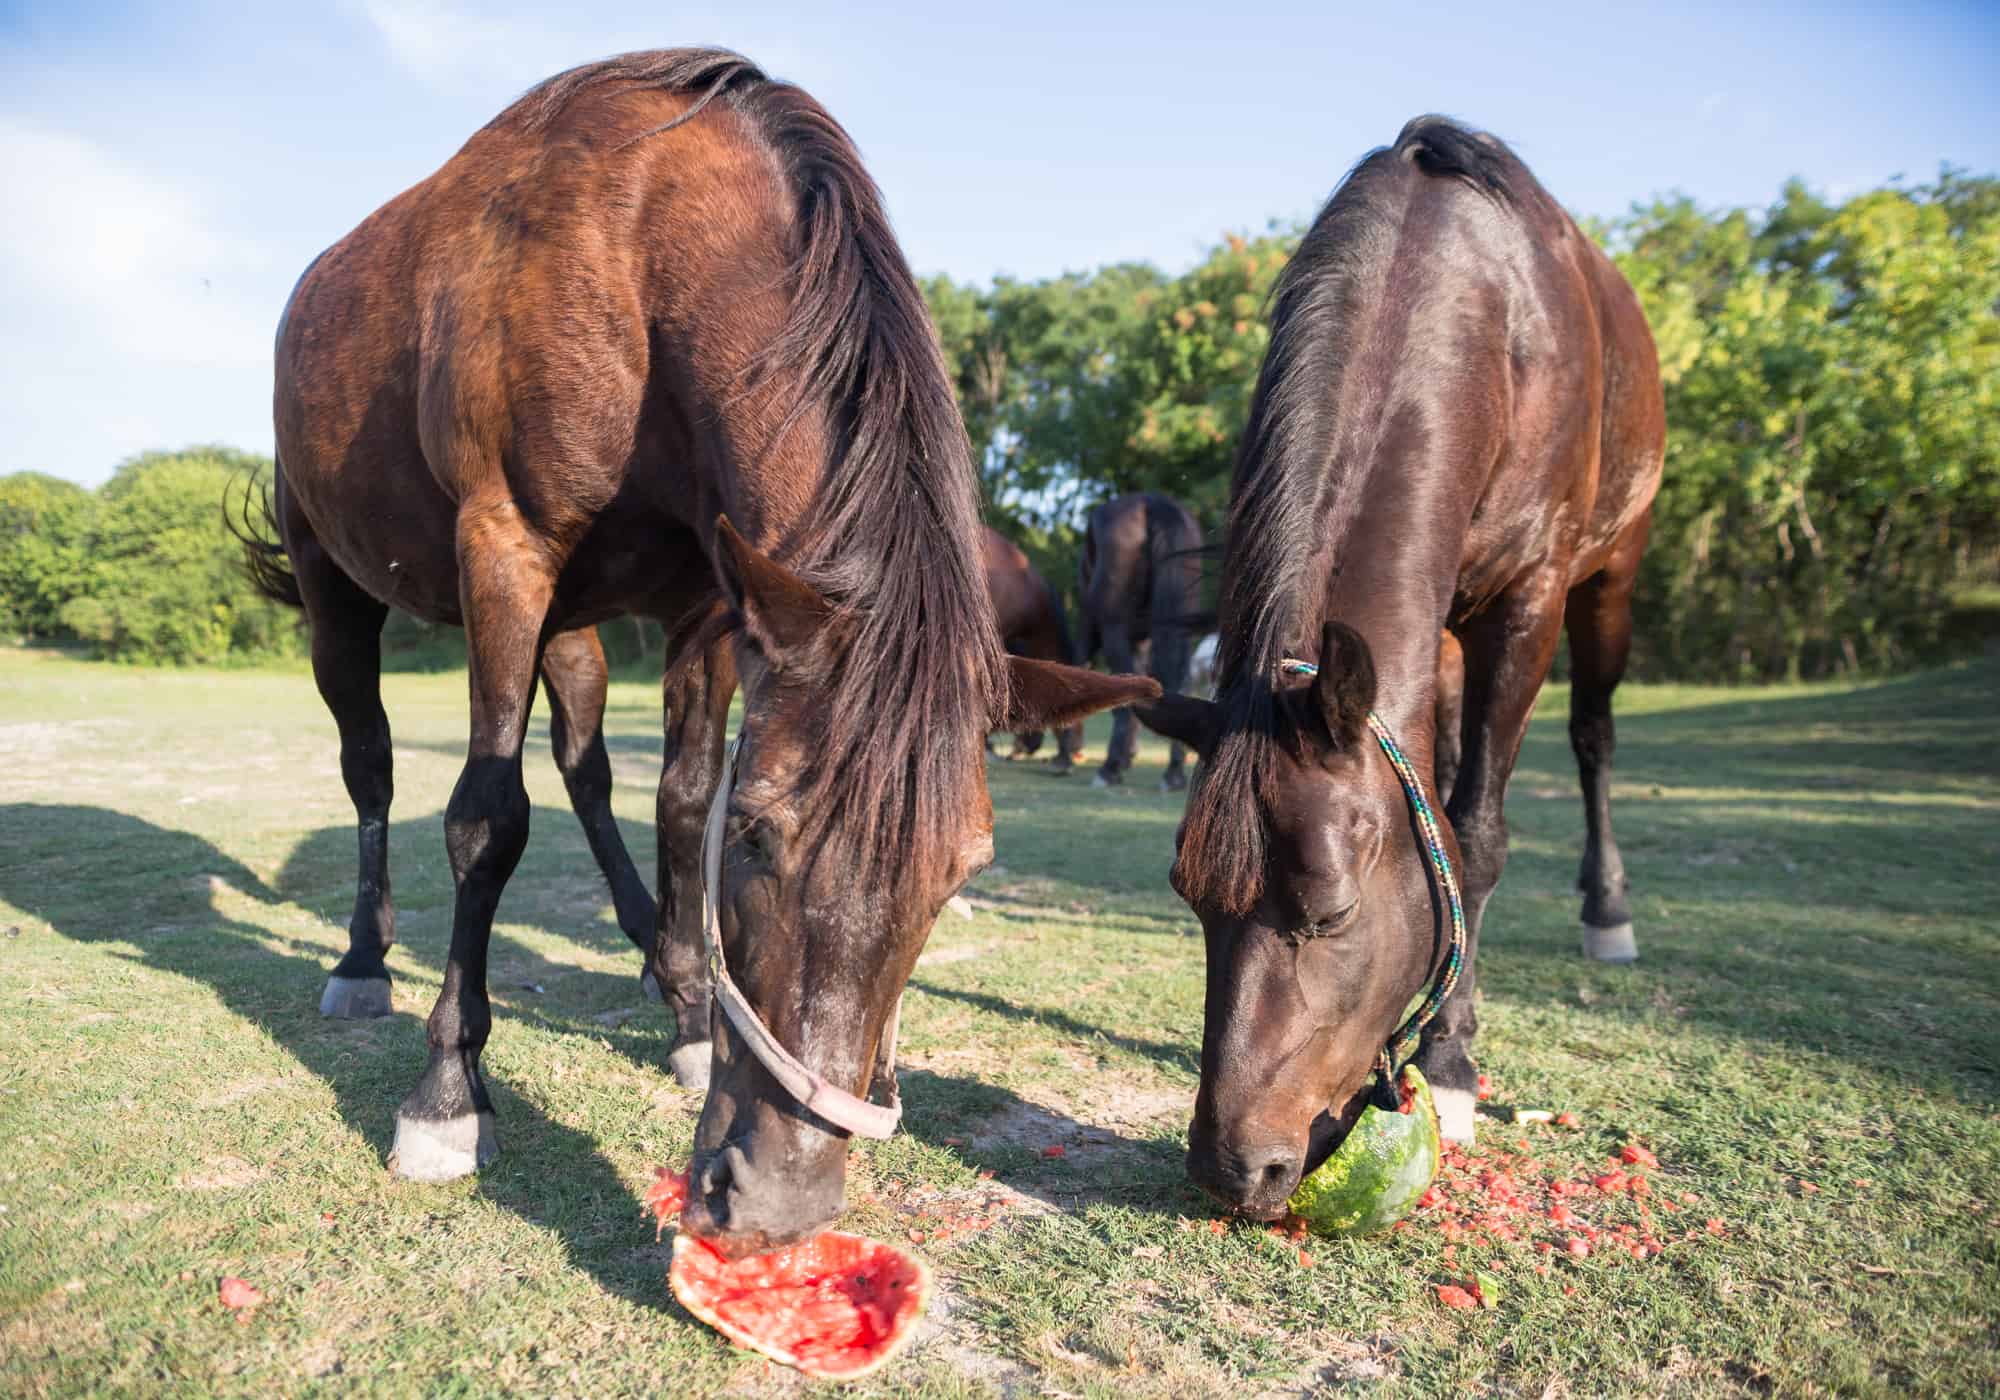 Can a Horse Eat Watermelon